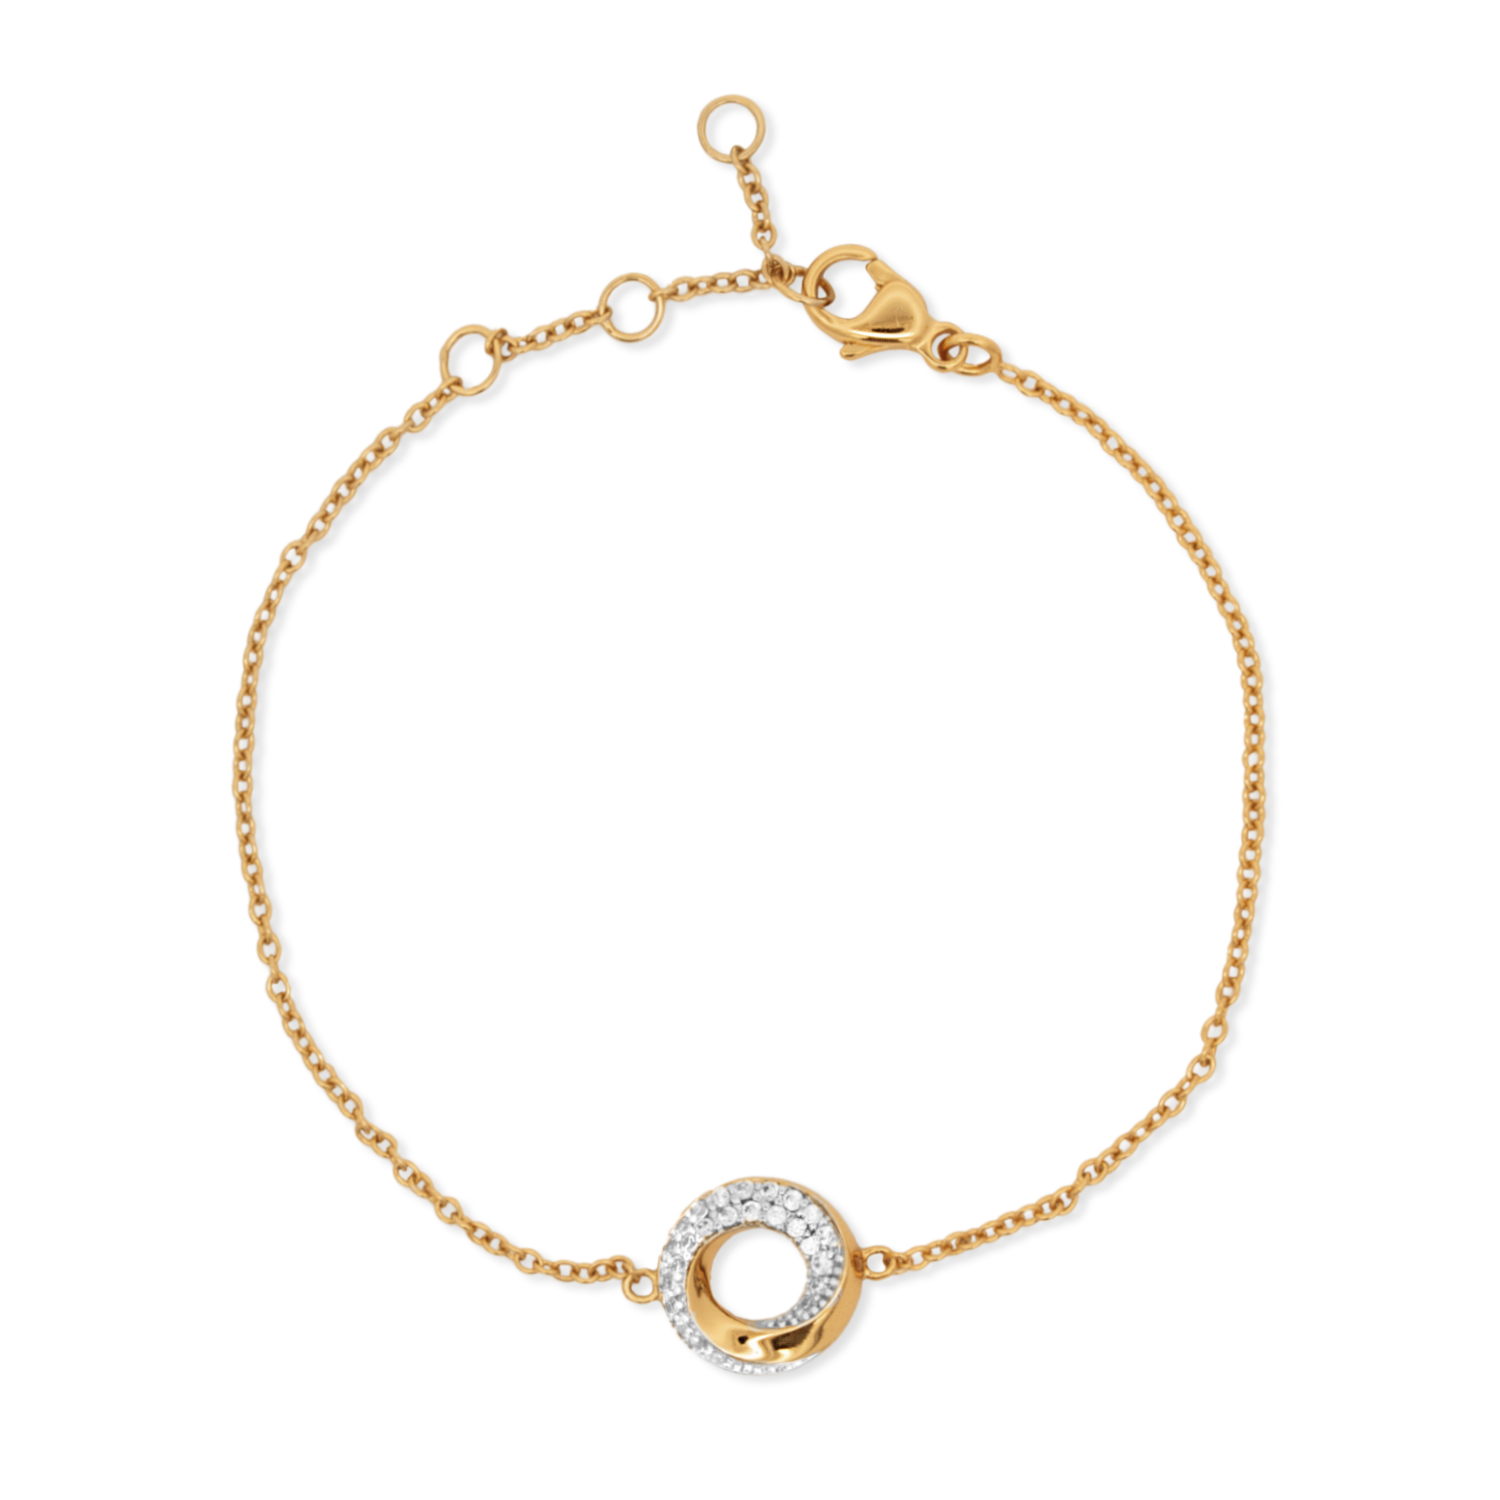 Elegant yet bold bracelet in gold with cubic zirconia stones. 